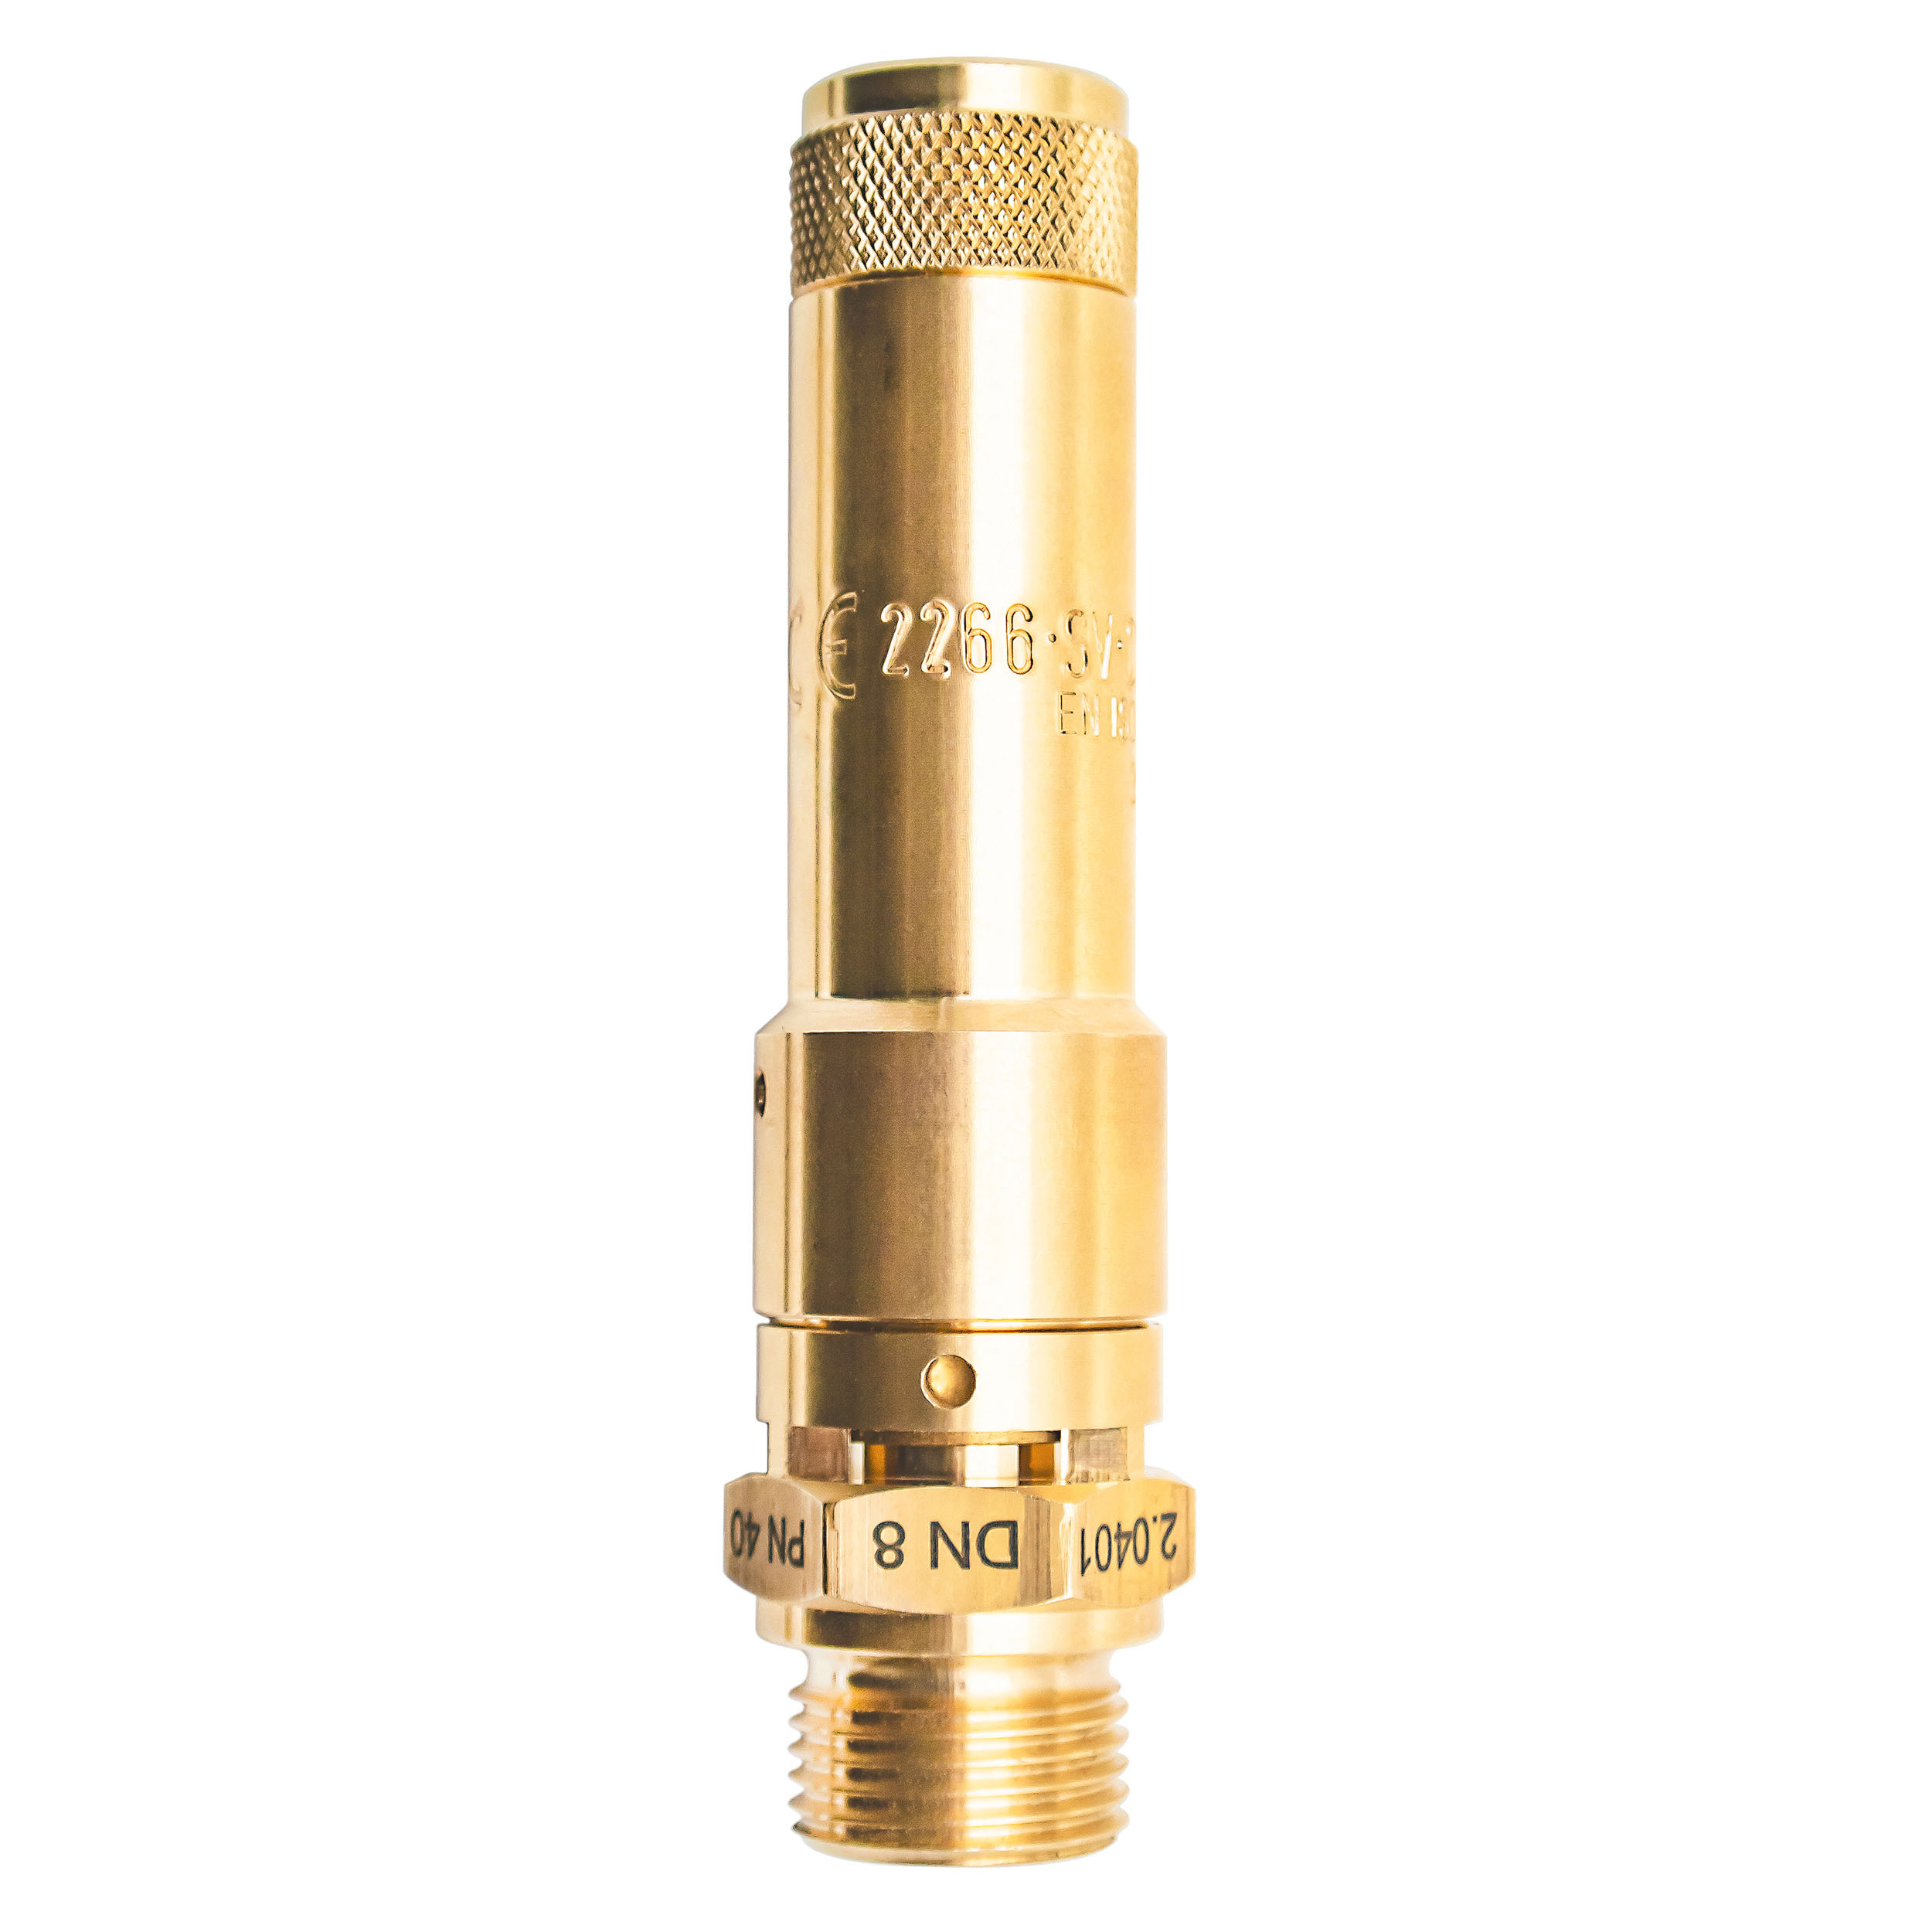 Savety valve component tested DN 8, G¼, set pressure: 6.1 bar (88,45 psi)